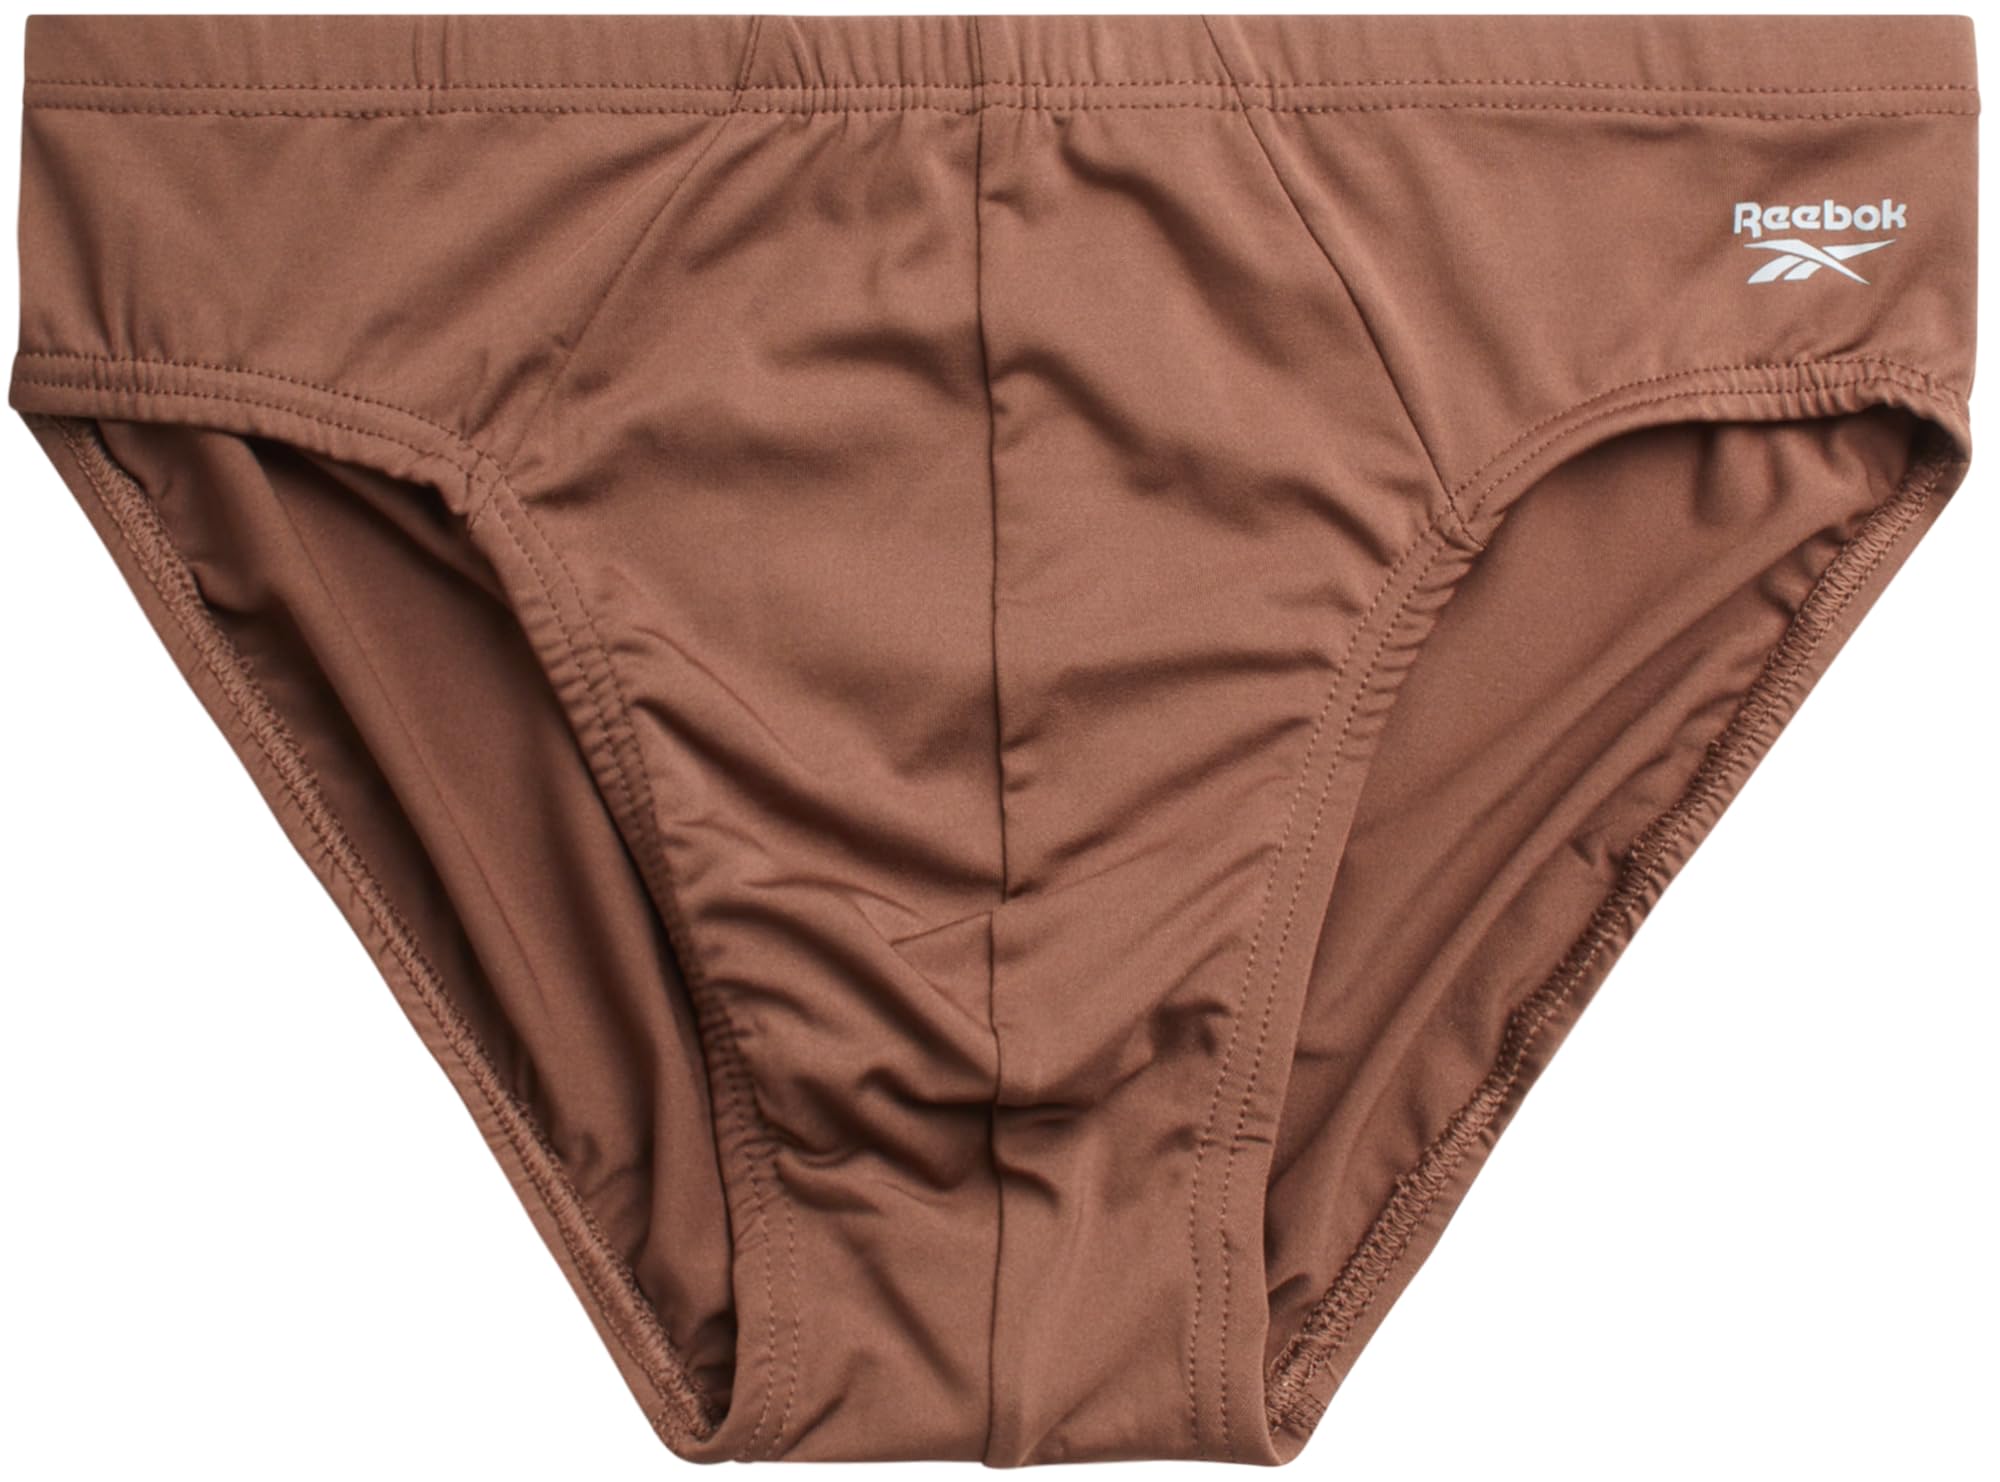 Buy Reebok Men's Underwear - Quick Dry Performance Low Rise Briefs (5 Pack)